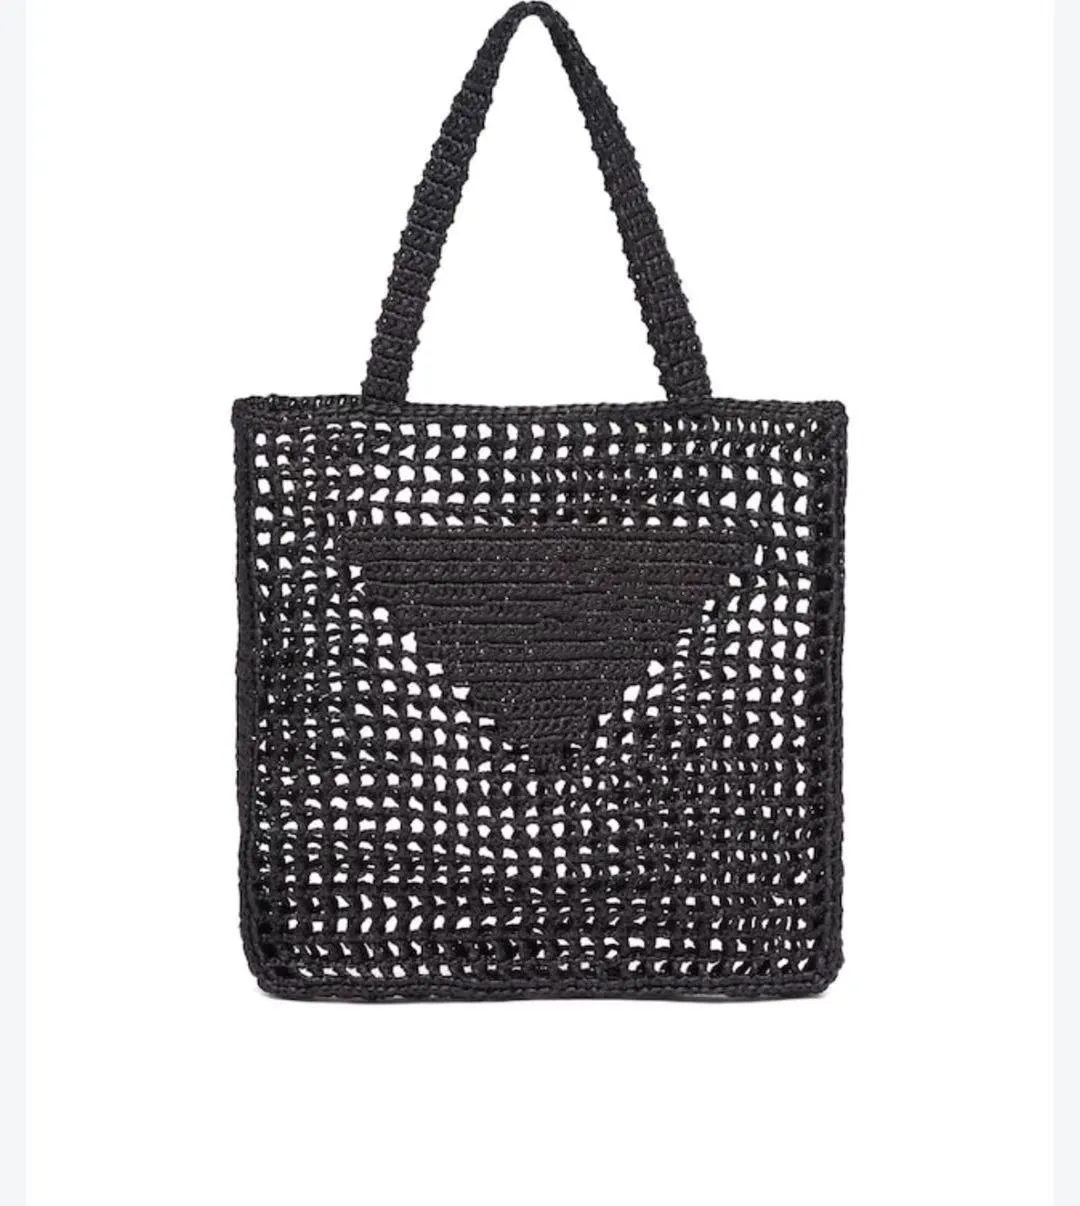 2023 Women Straw Shopping Bag Wine Coconut Fiber Tote Bags Ladies Summer Fashion Beach Crochet Pouch fashion handbags size33 38cm251m